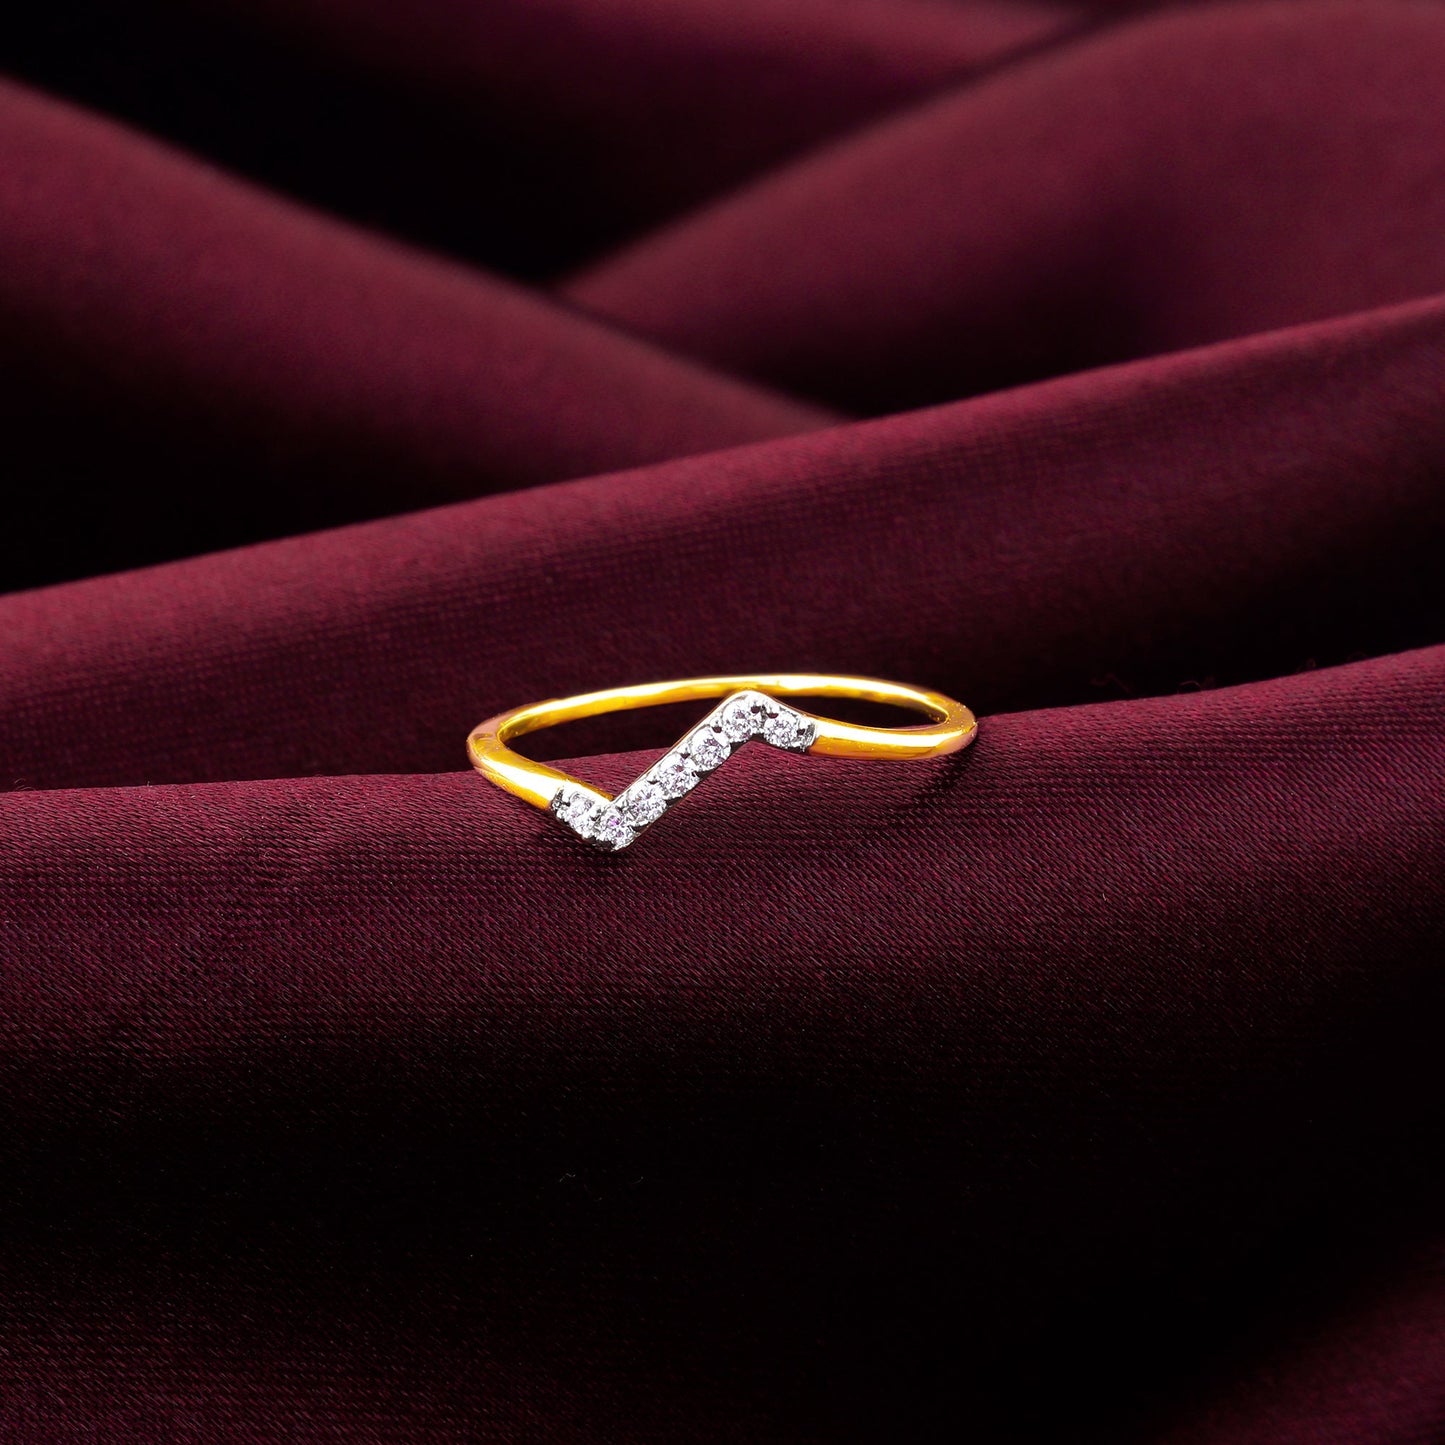 Gold Angled Waves Diamond Ring